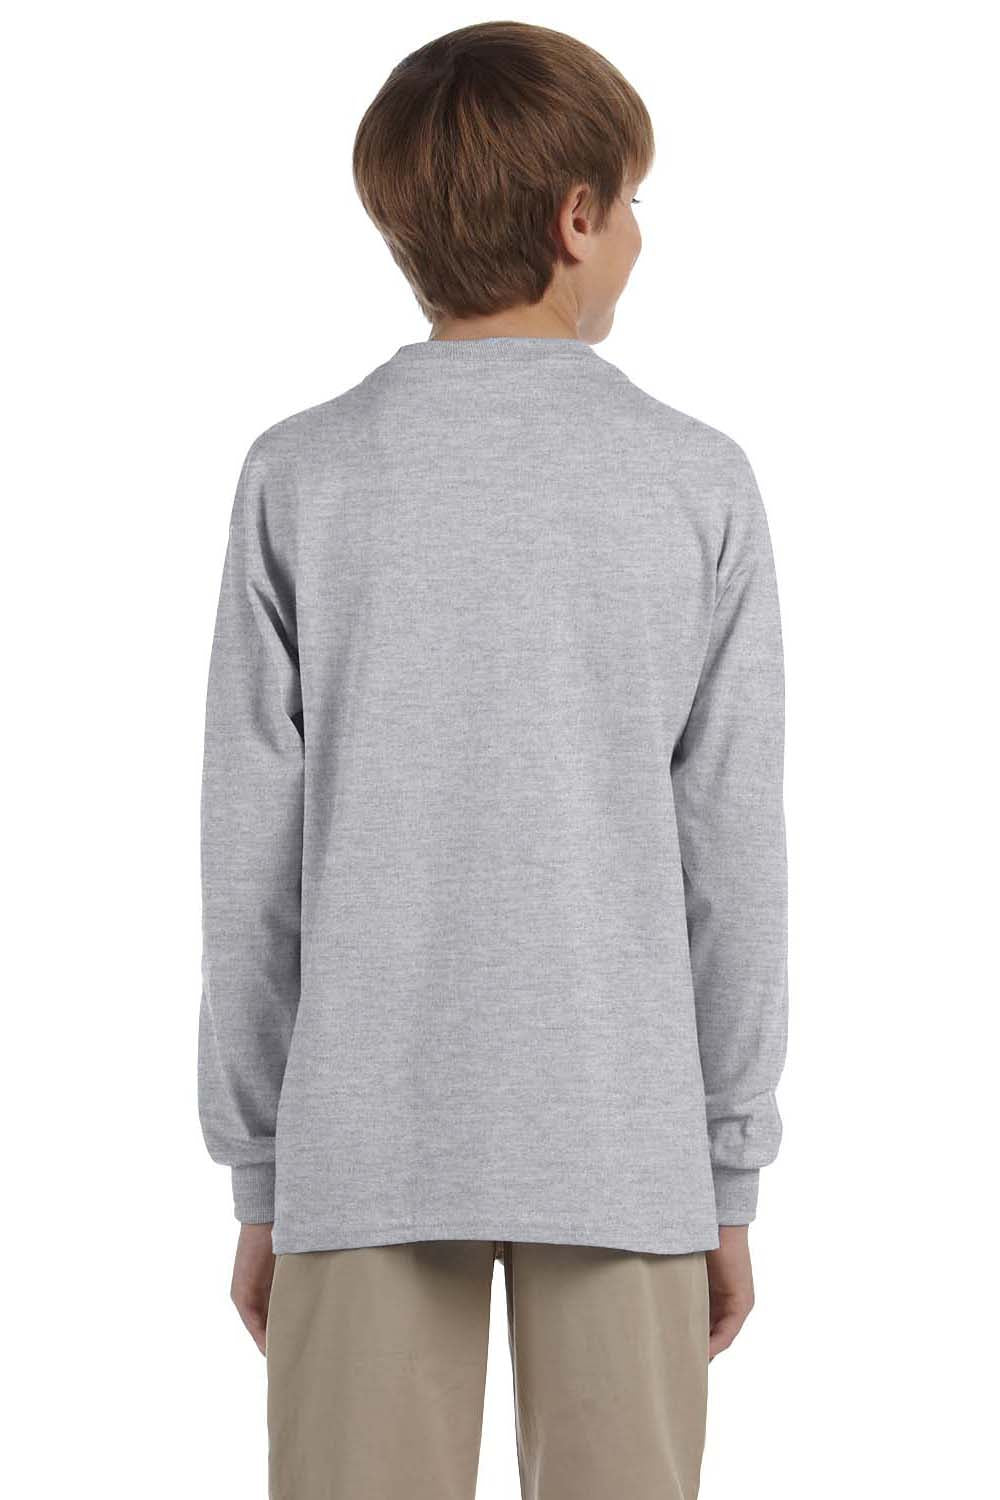 Jerzees 29BL Youth Dri-Power Moisture Wicking Long Sleeve Crewneck T-Shirt Oxford Grey Back